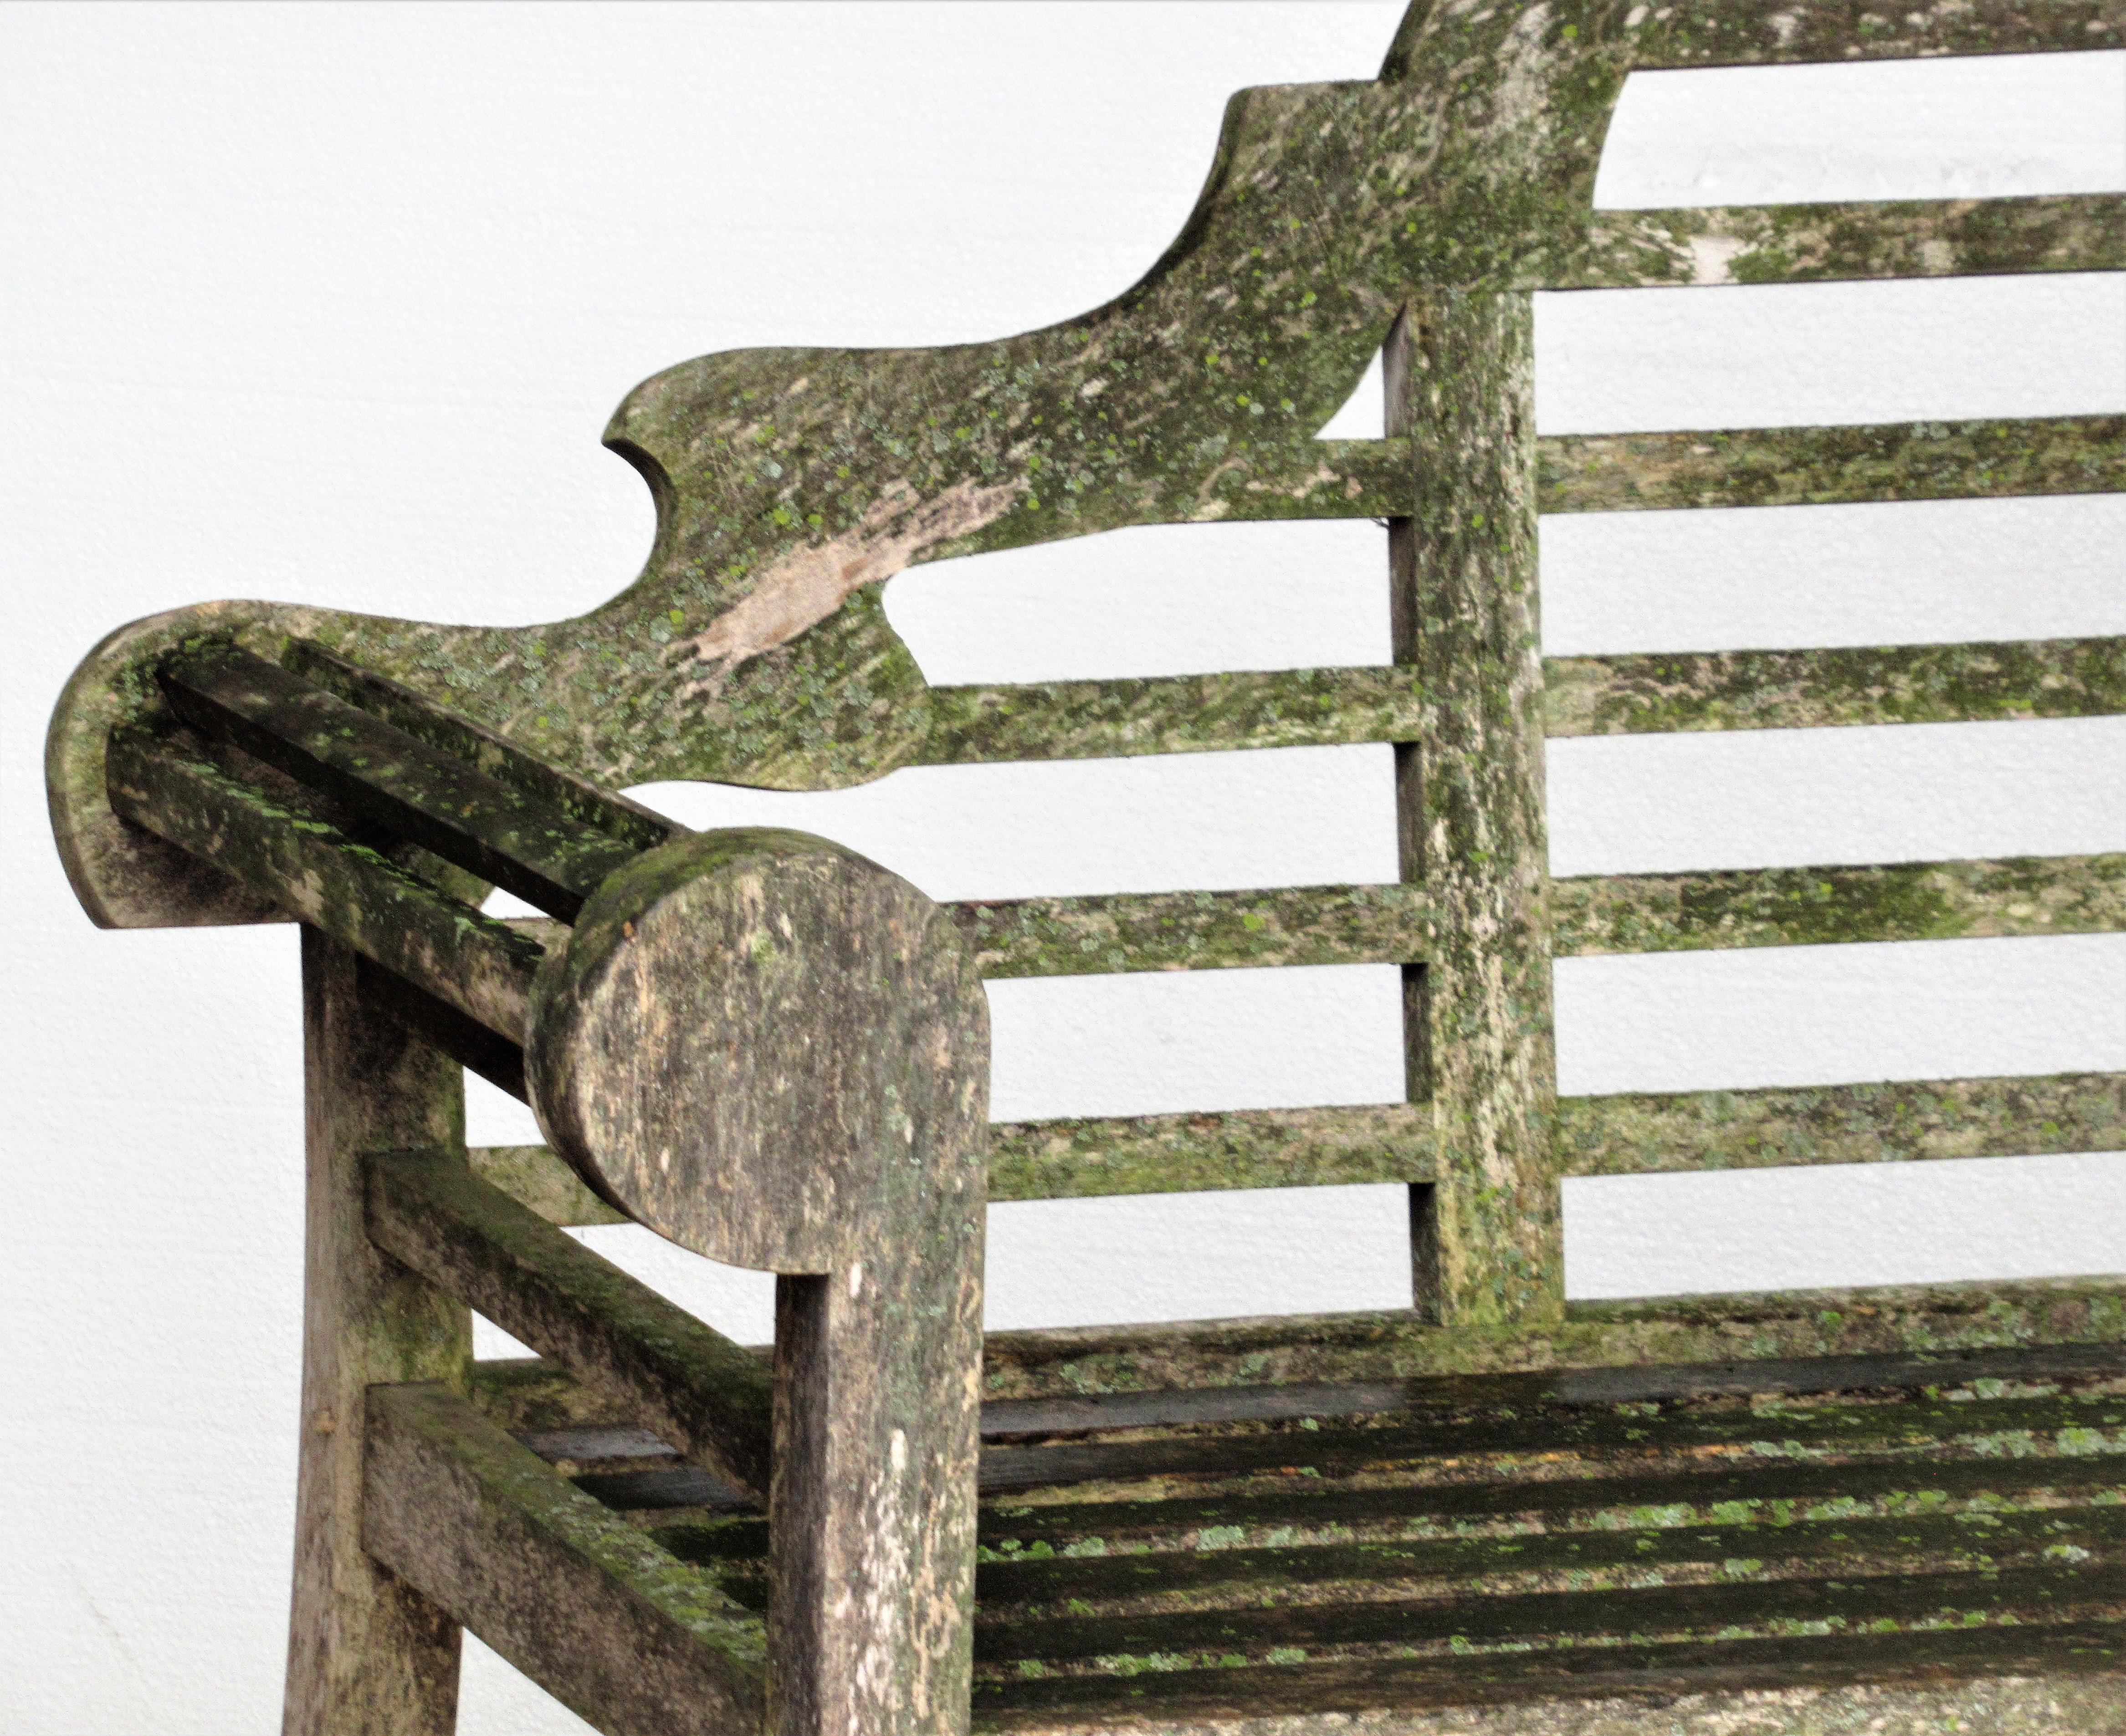 weathered teak bench